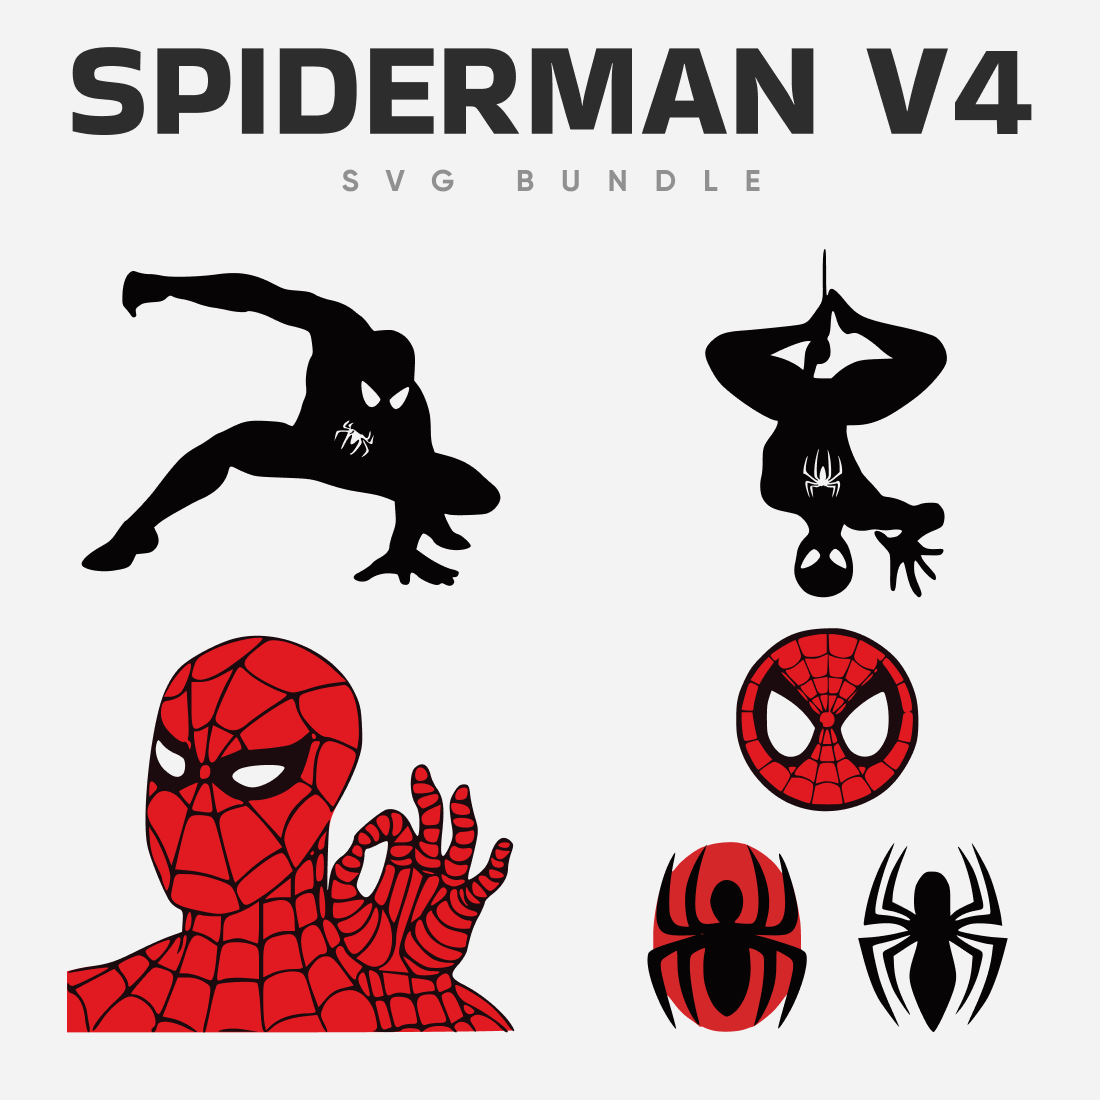 Classic spiderman v4 SVG.